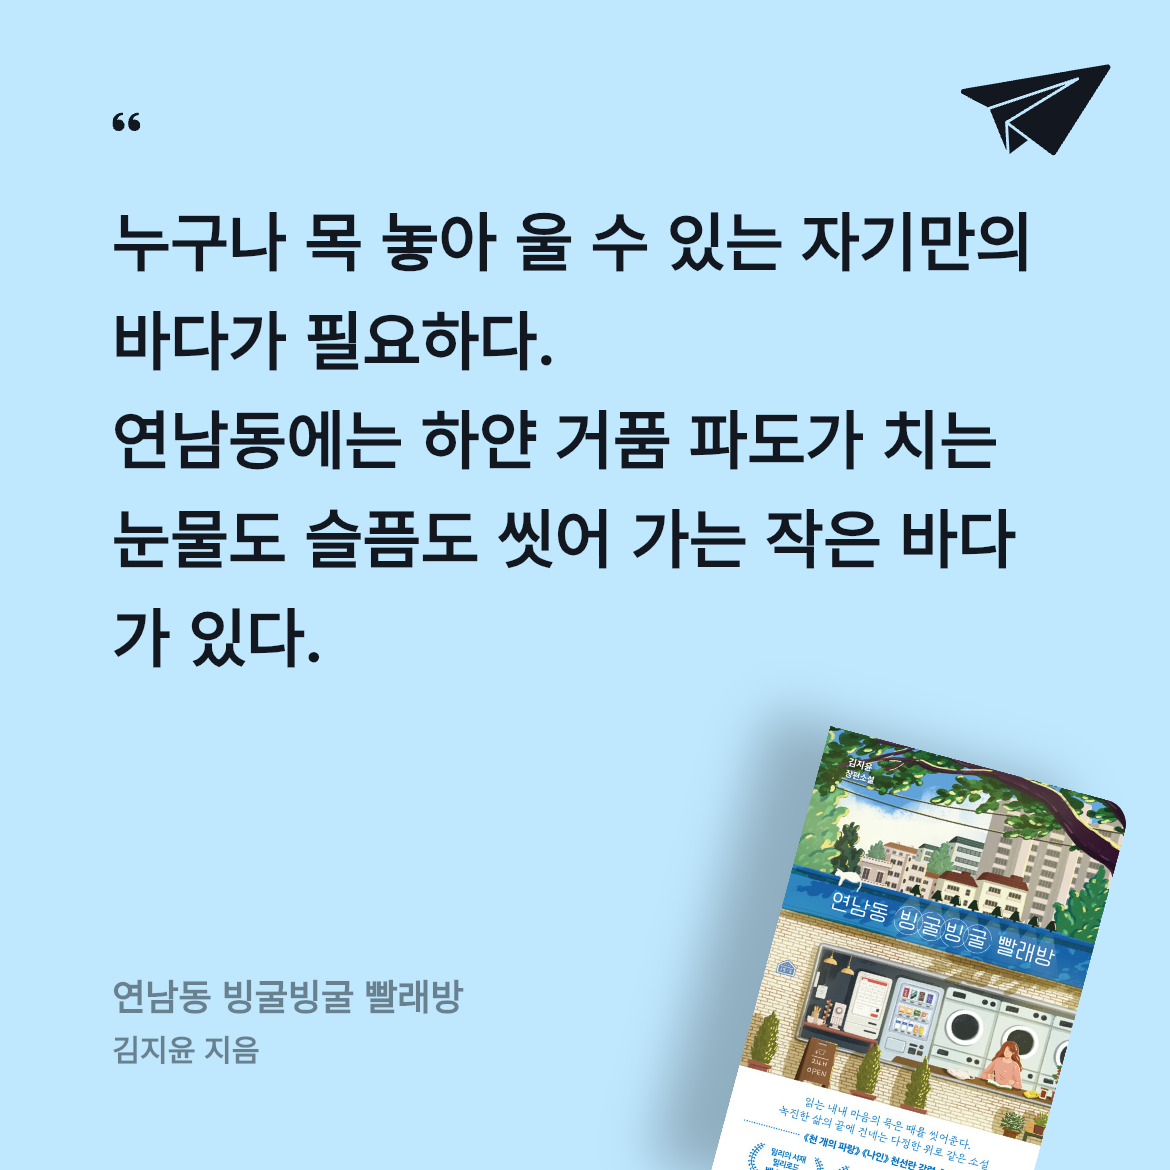 Chococook님의 리뷰 이미지 1 - 연남동 빙굴빙굴 빨래방